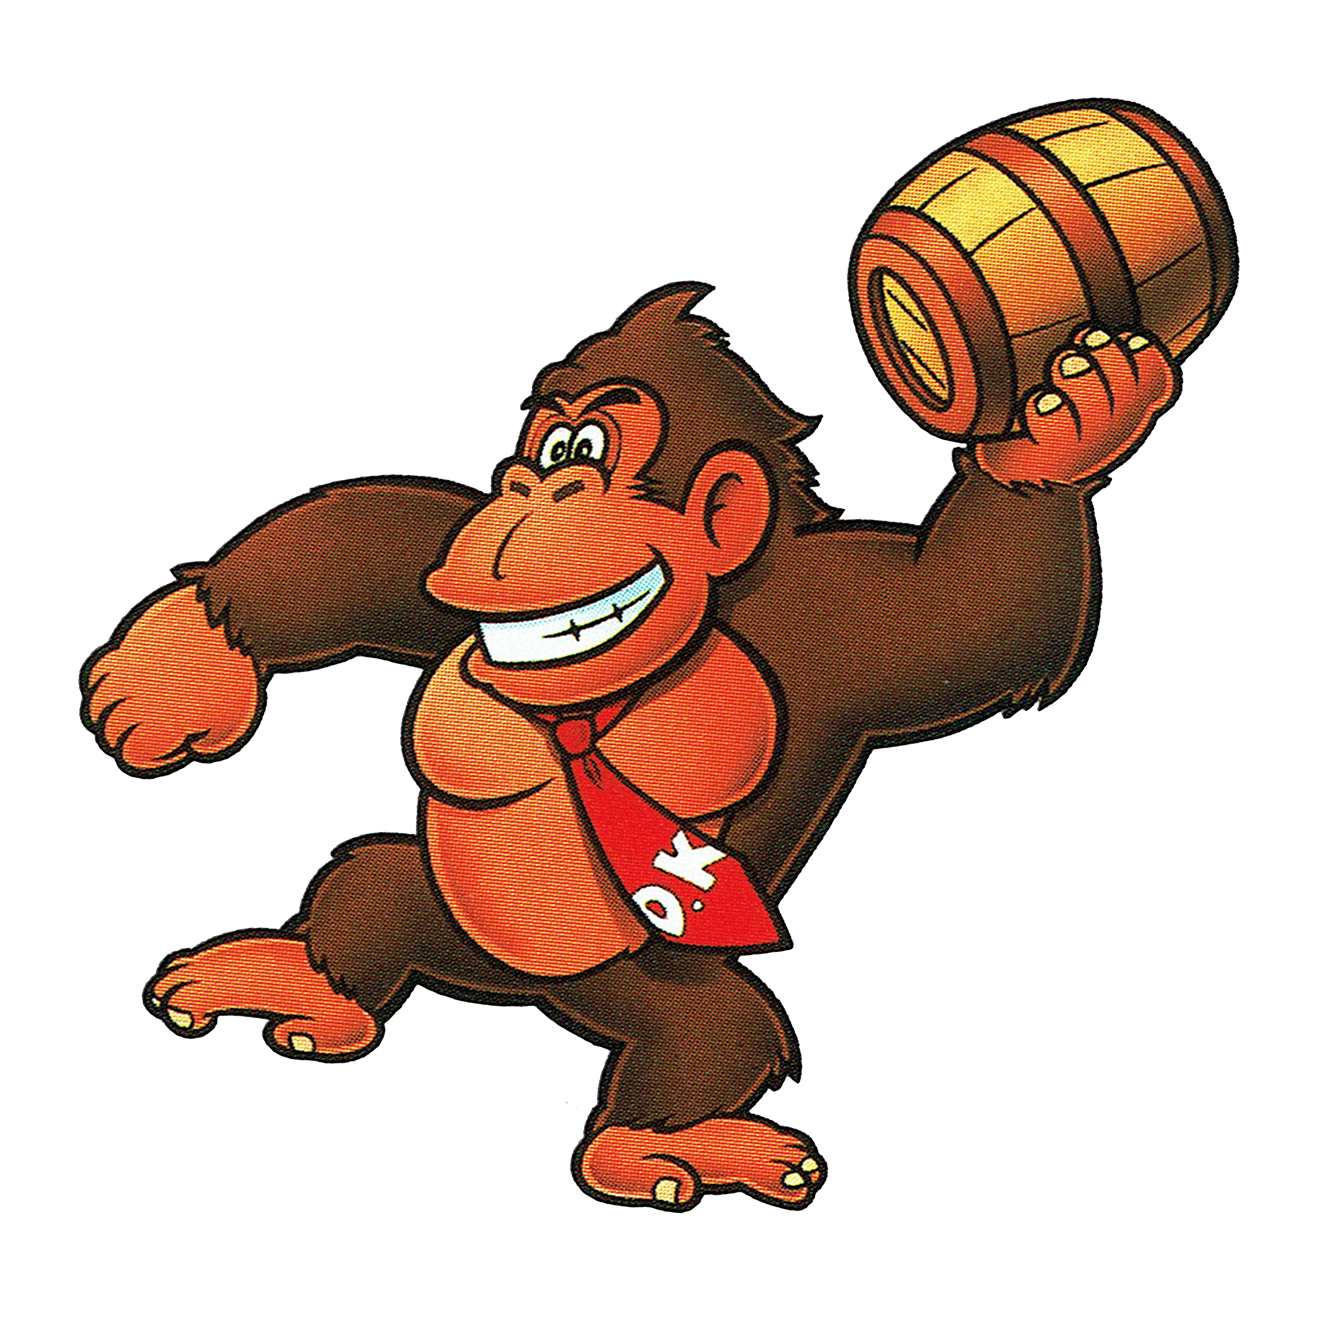 Donkey Kong - Donkey Kong With Barrel (1321x1321)